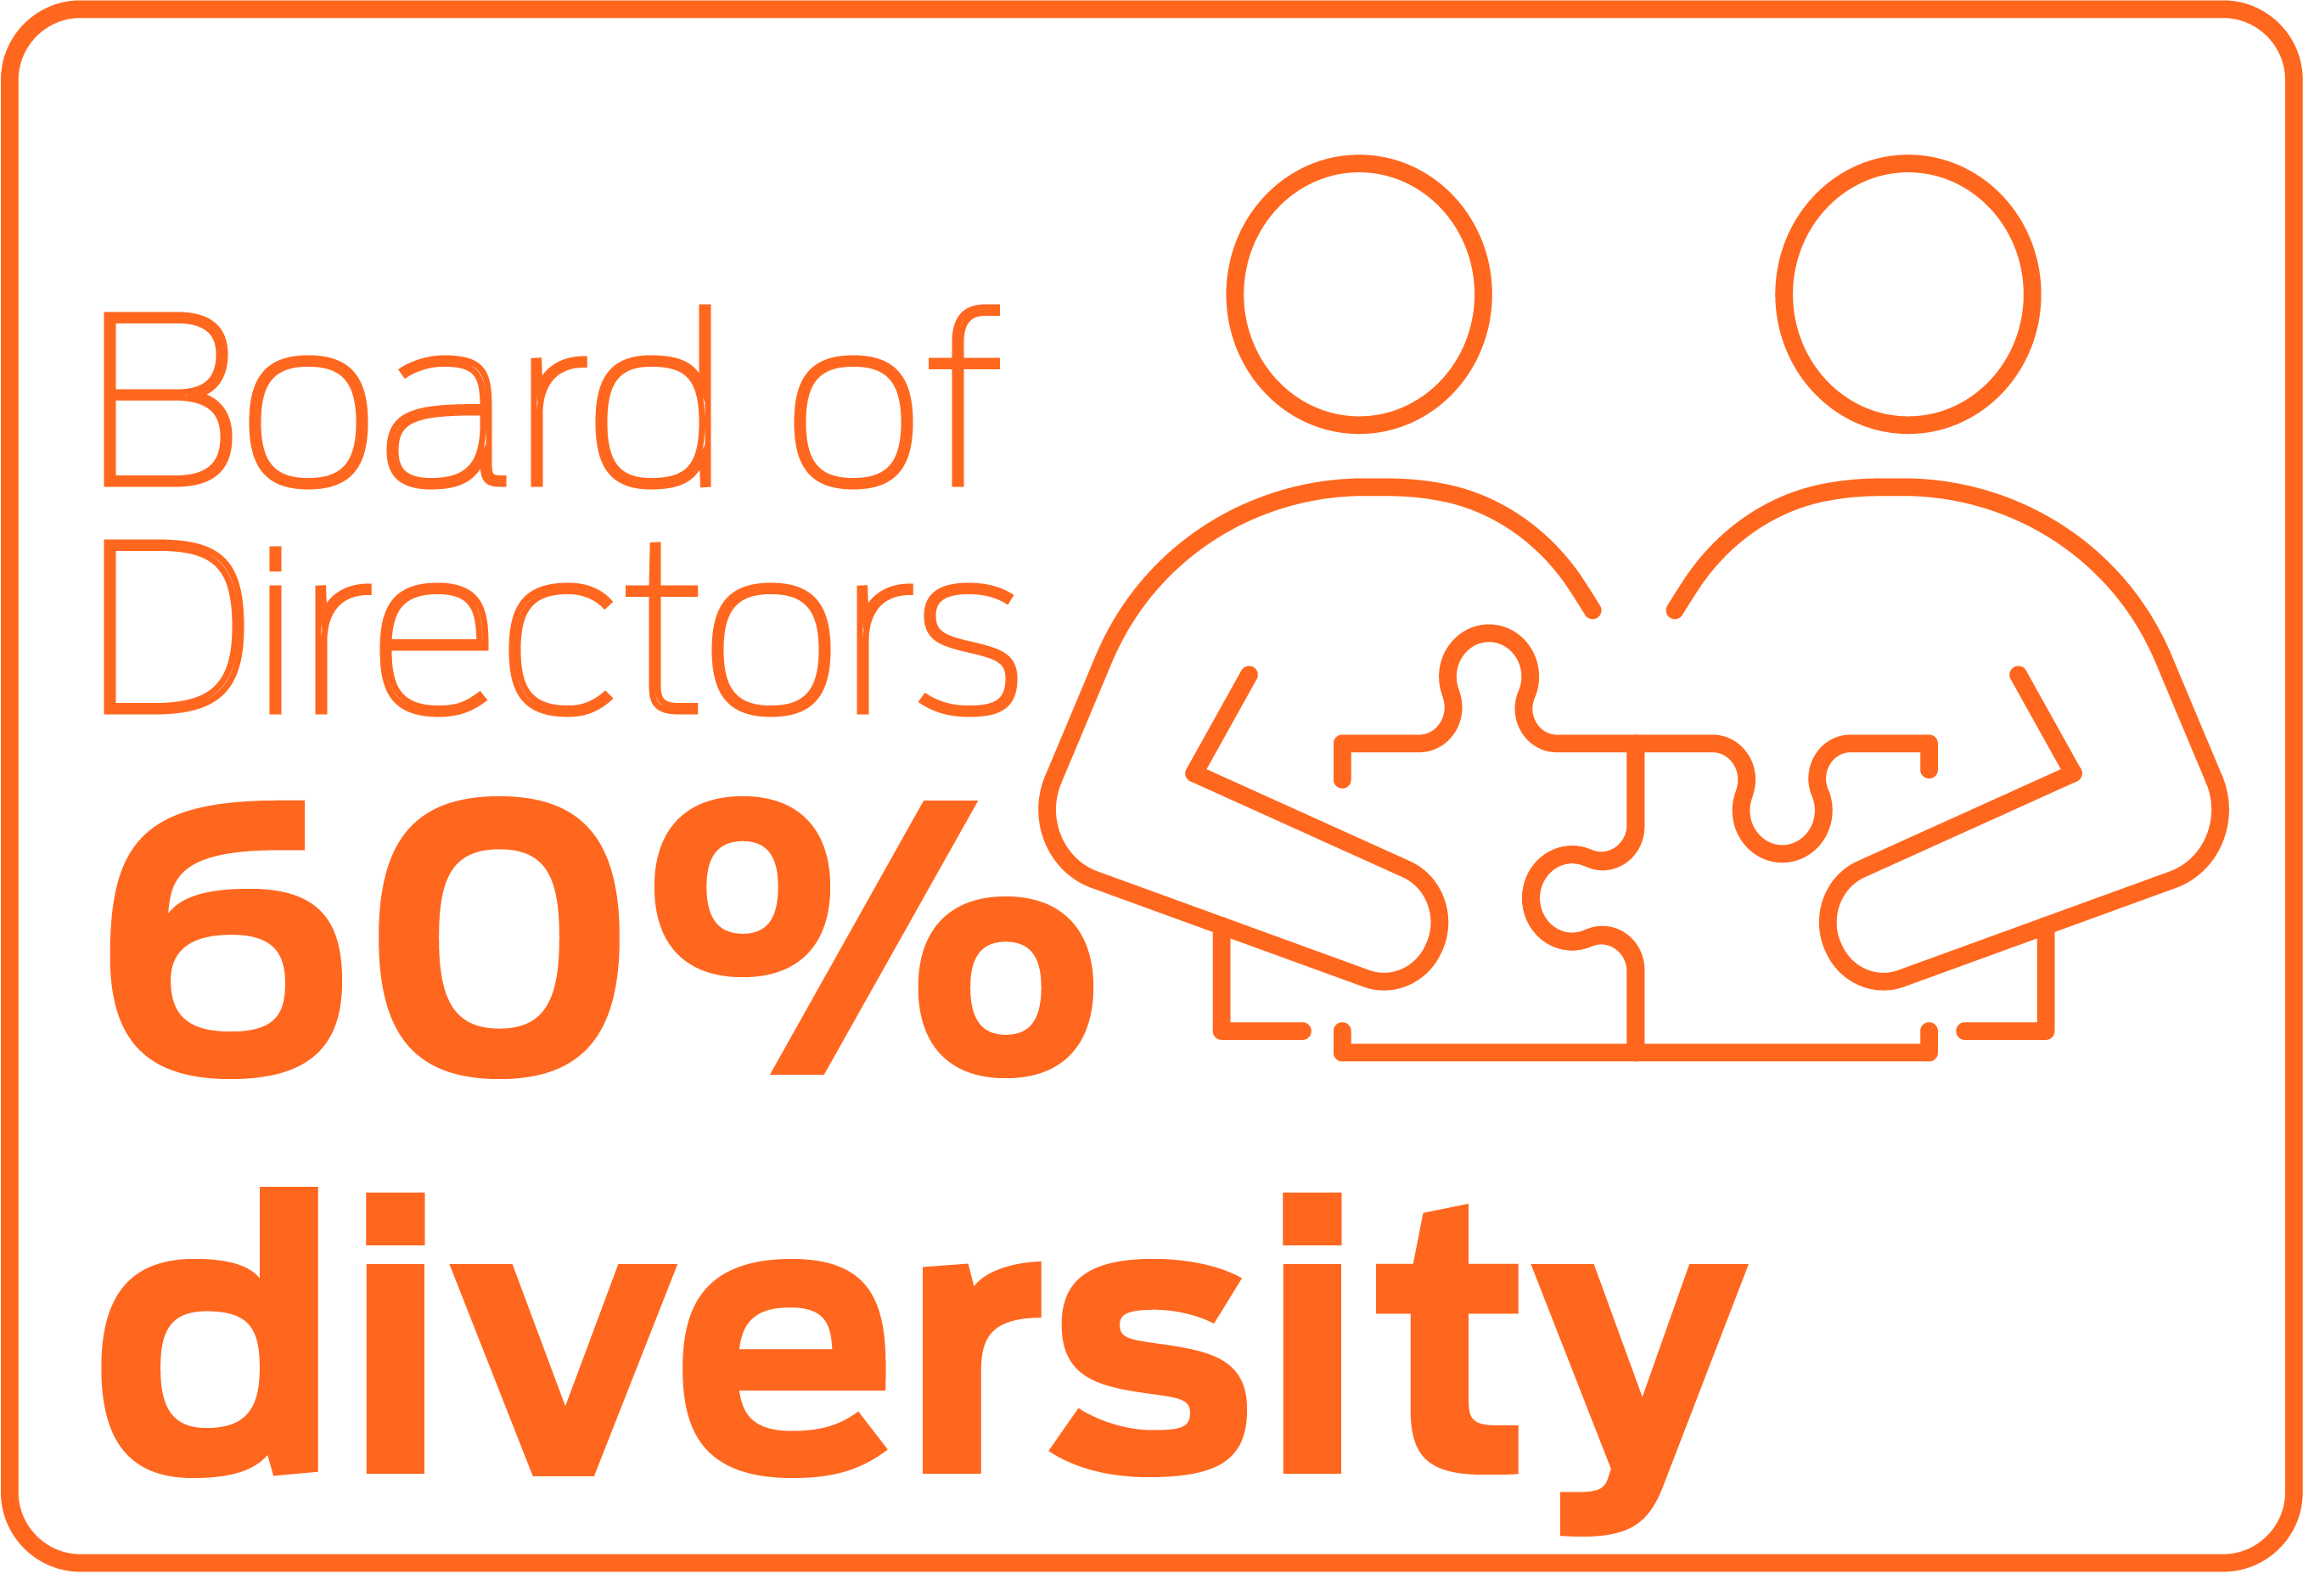 Board of Directors 56% diversity